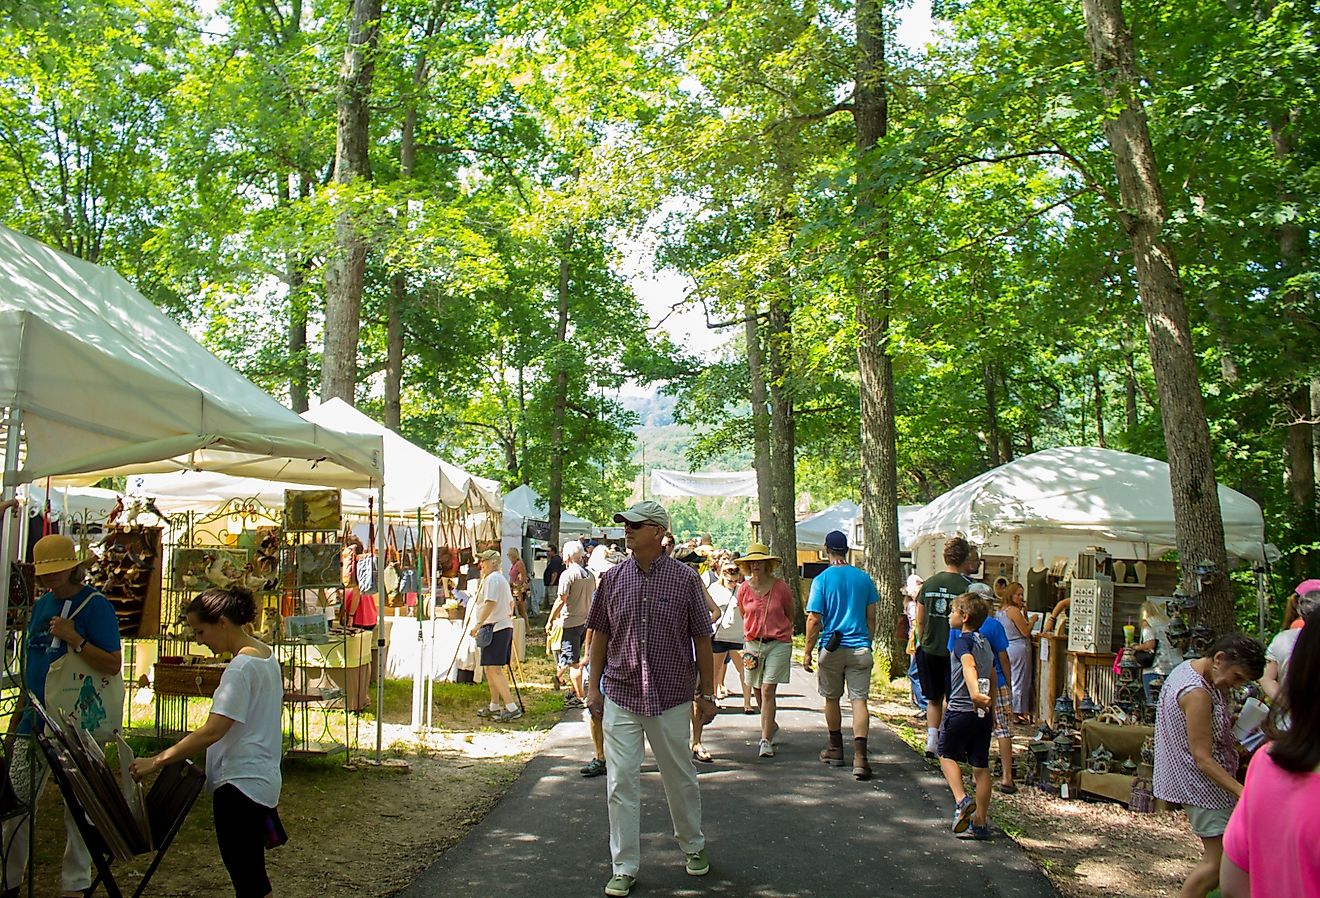 Crafts Festival in Berea, Kentucky in the summer. Image credit Stephen Nwaloziri via Shutterstock.